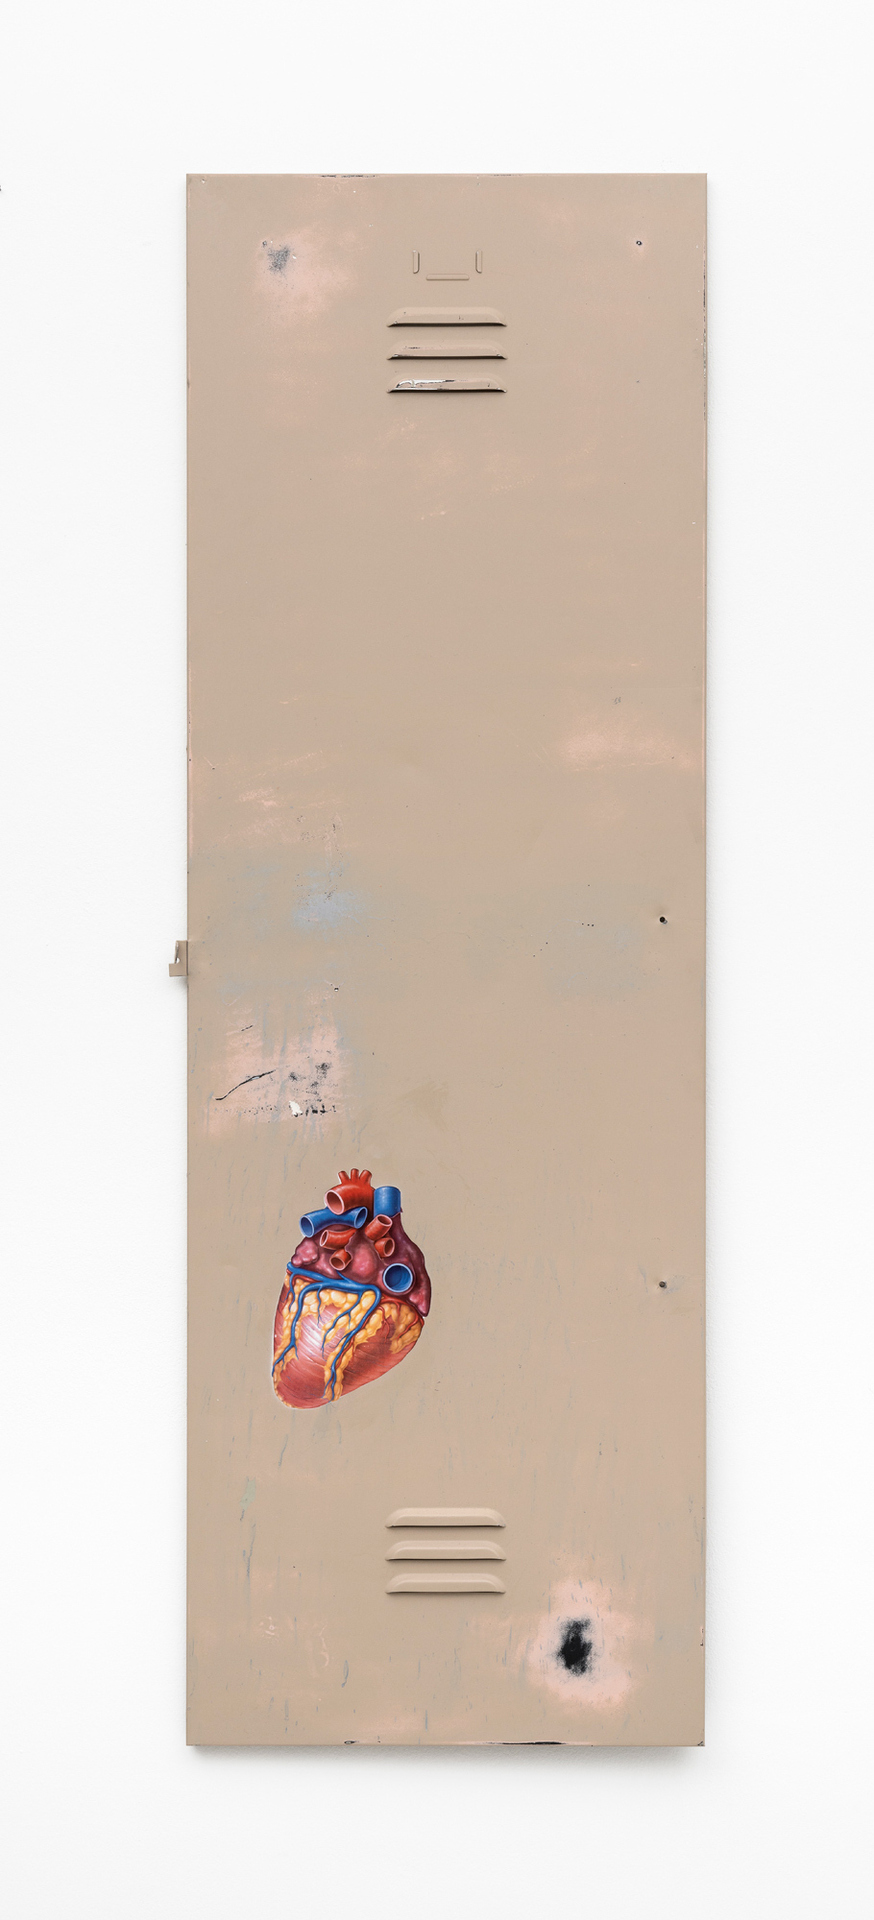 Felix Kultau, Heart Locker, 2020, acrylic and digital print on metal, 168 x 55 cm